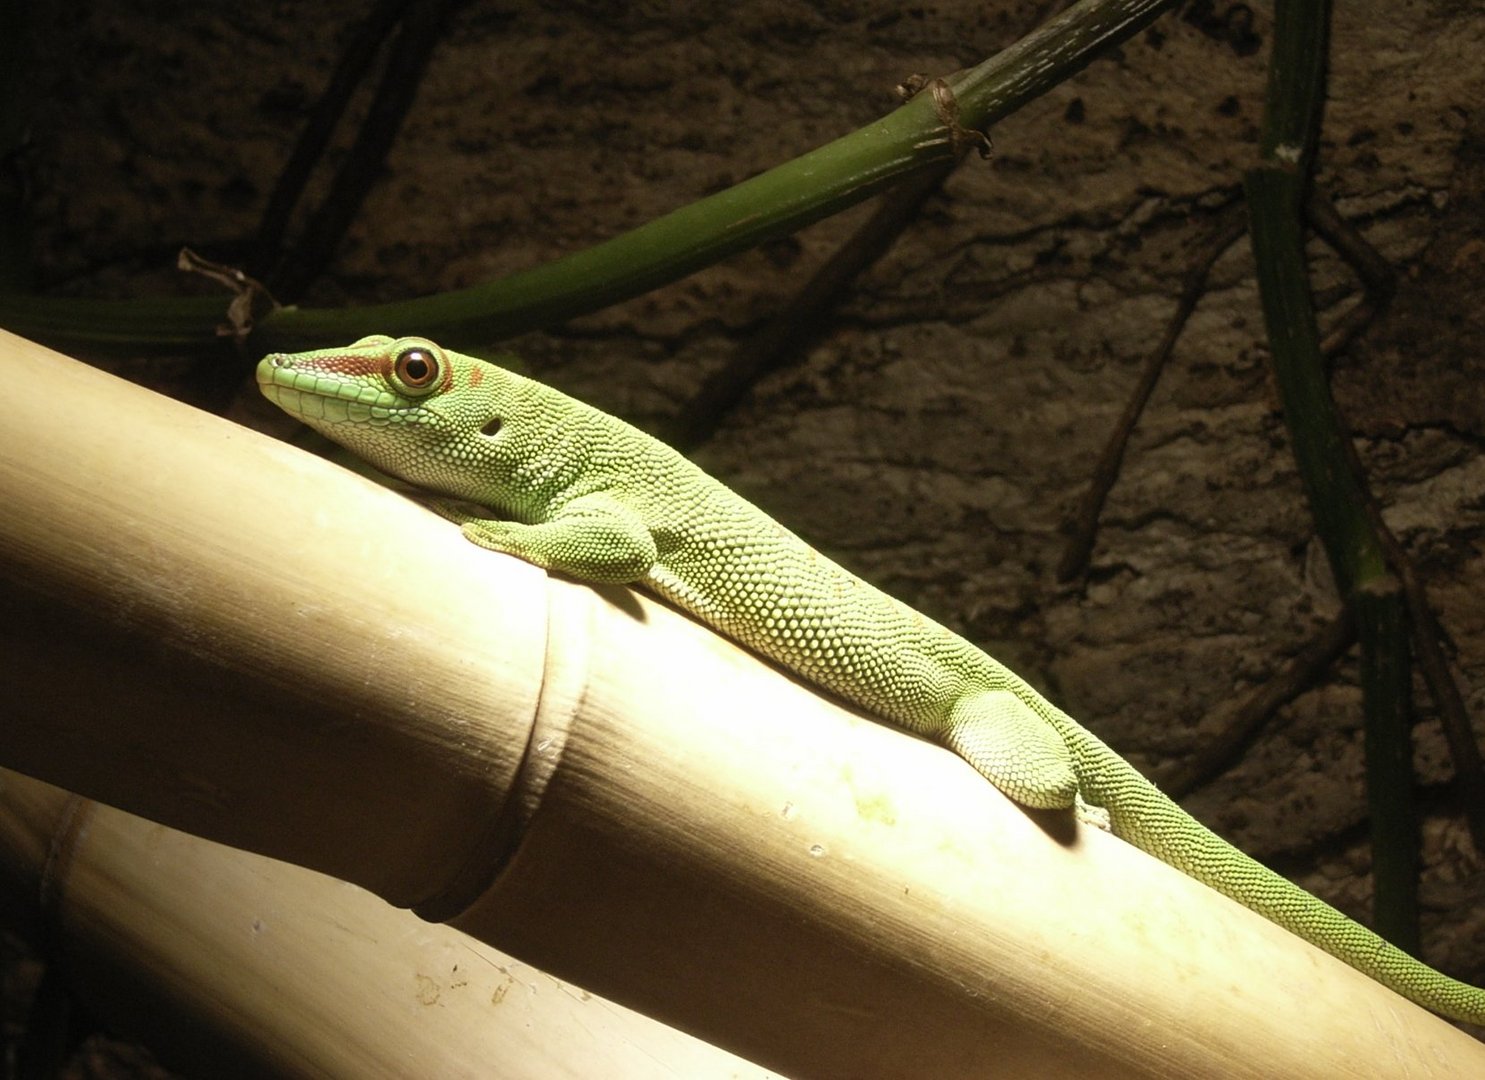 Grosser Madagaskar Taggecko